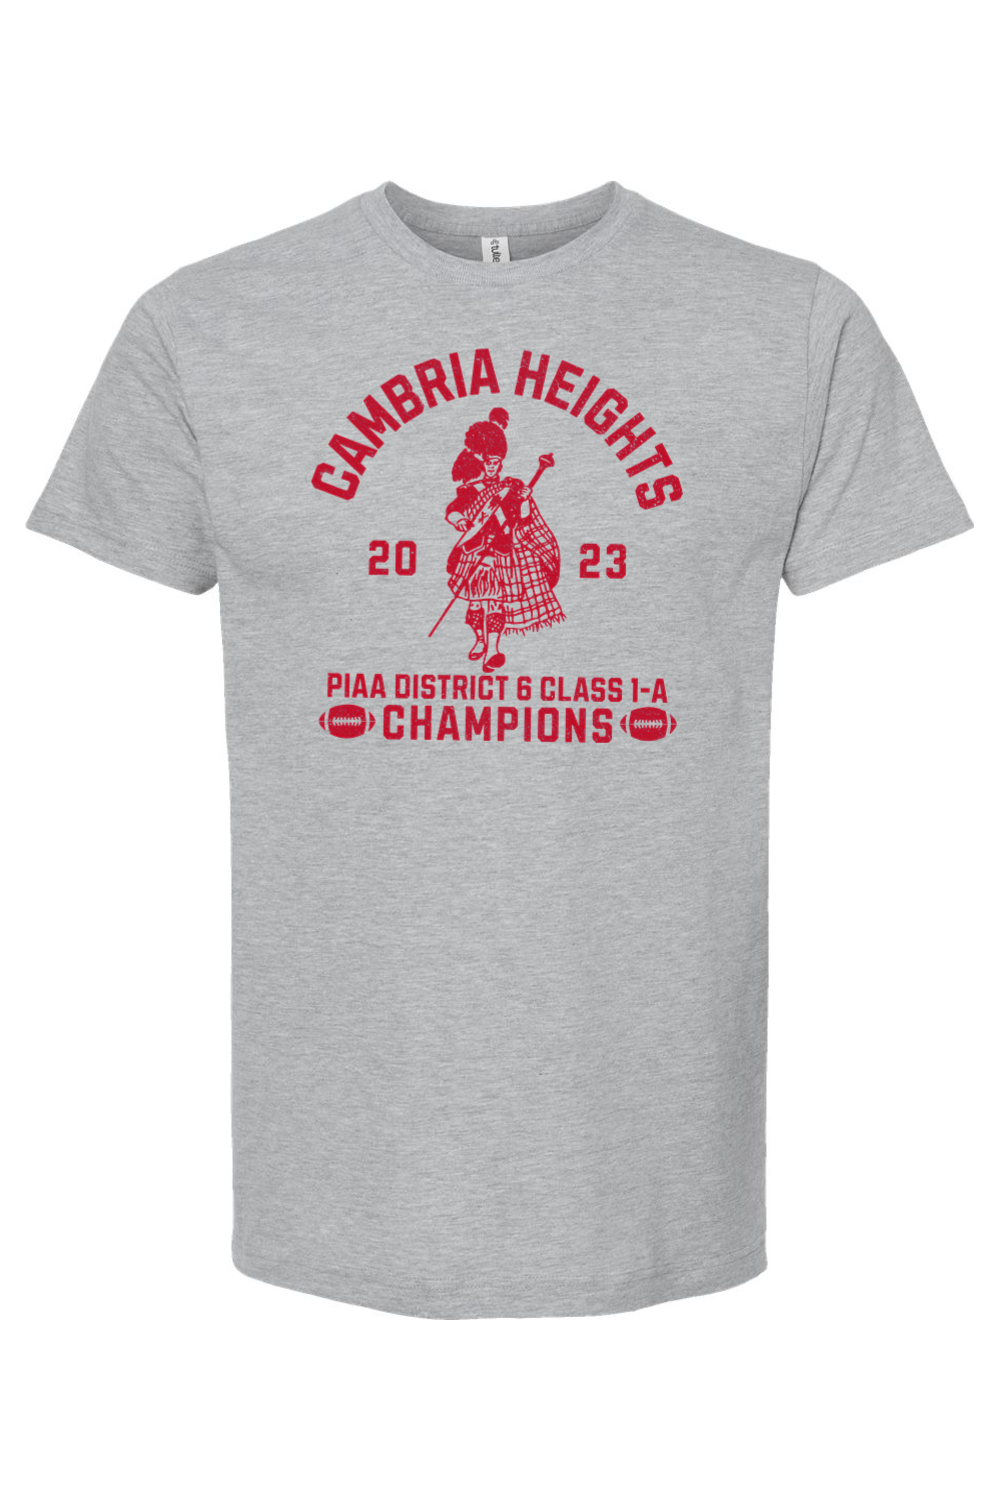 CH Champions - Throwback T-Shirt - Yinzylvania